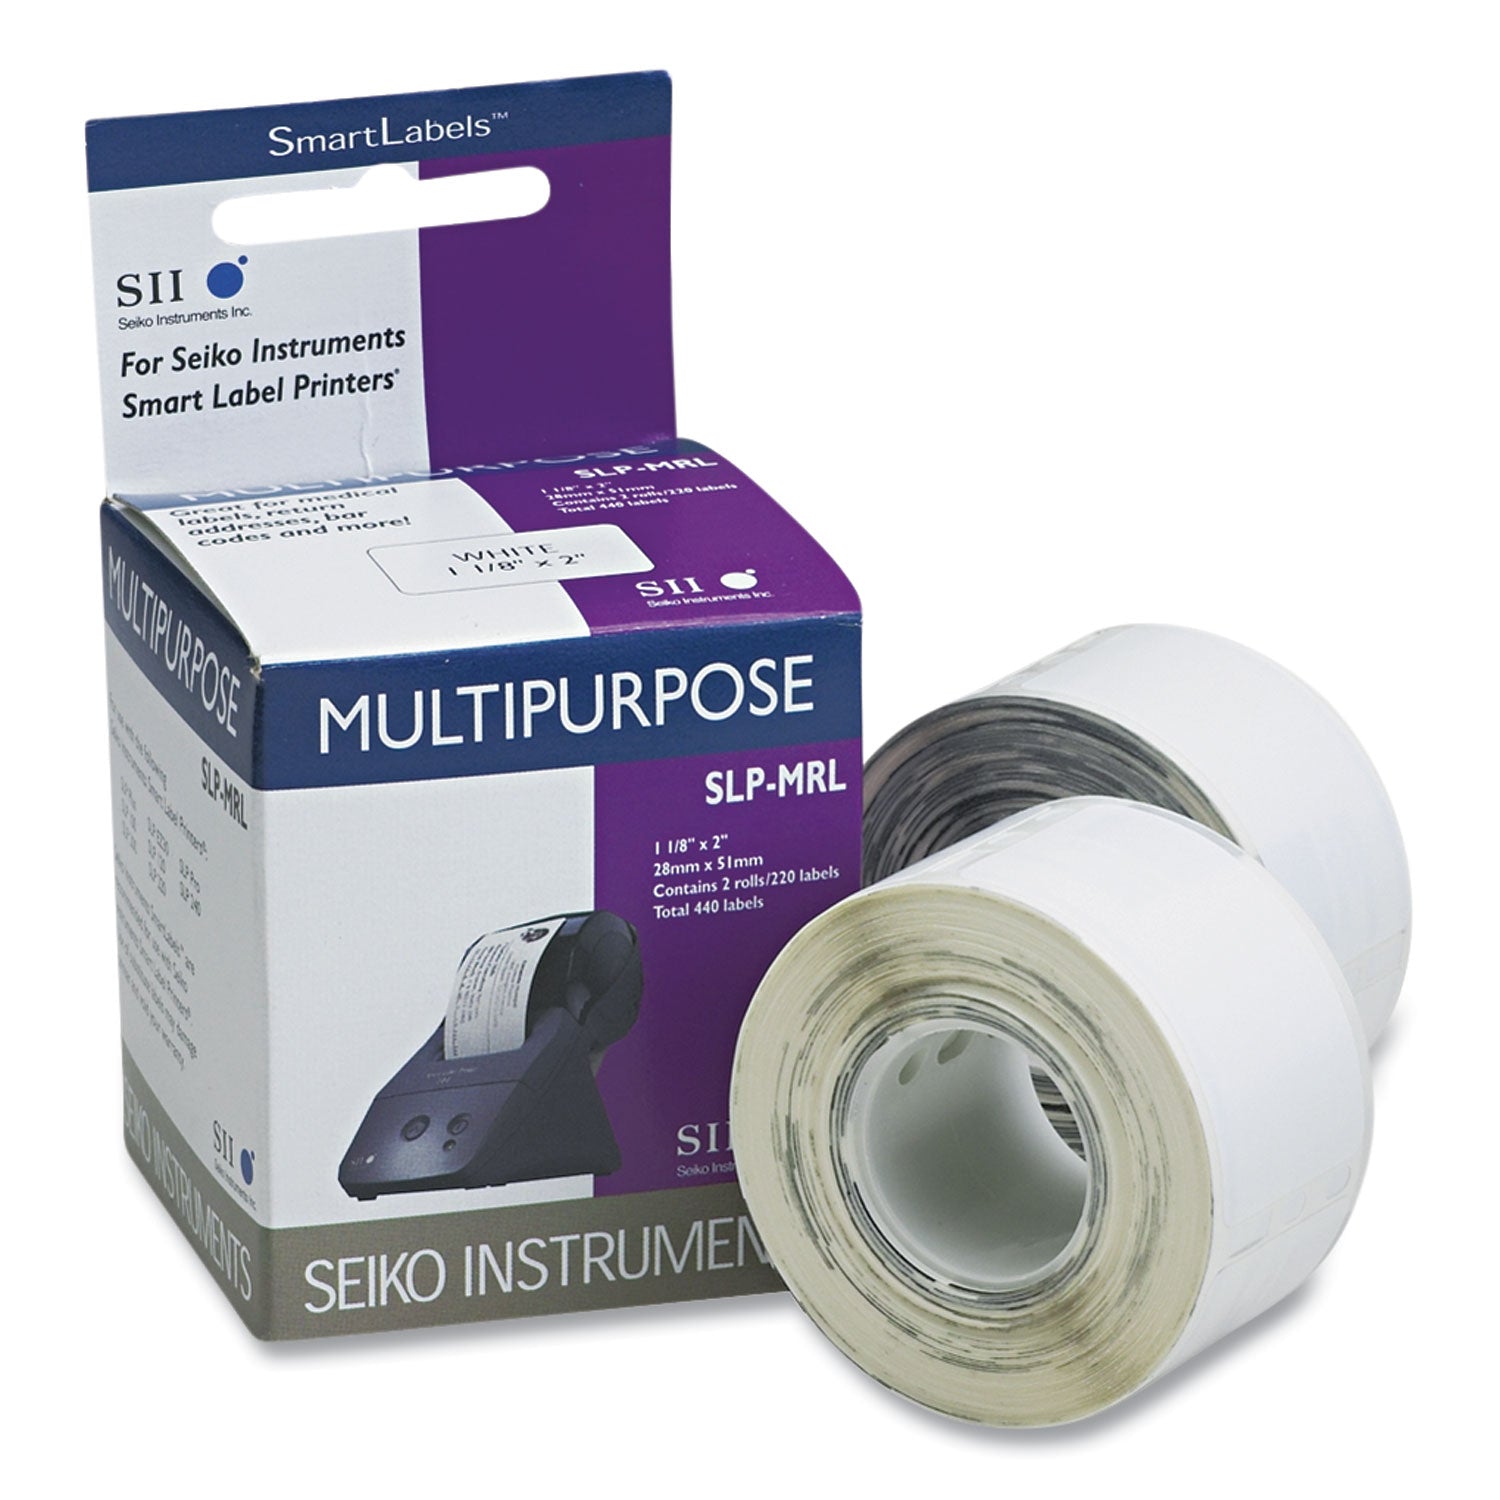 SLP-MRL Self-Adhesive Multipurpose Labels, 1.12" x 2", White, 220 Labels/Roll, 2 Rolls/Box - 